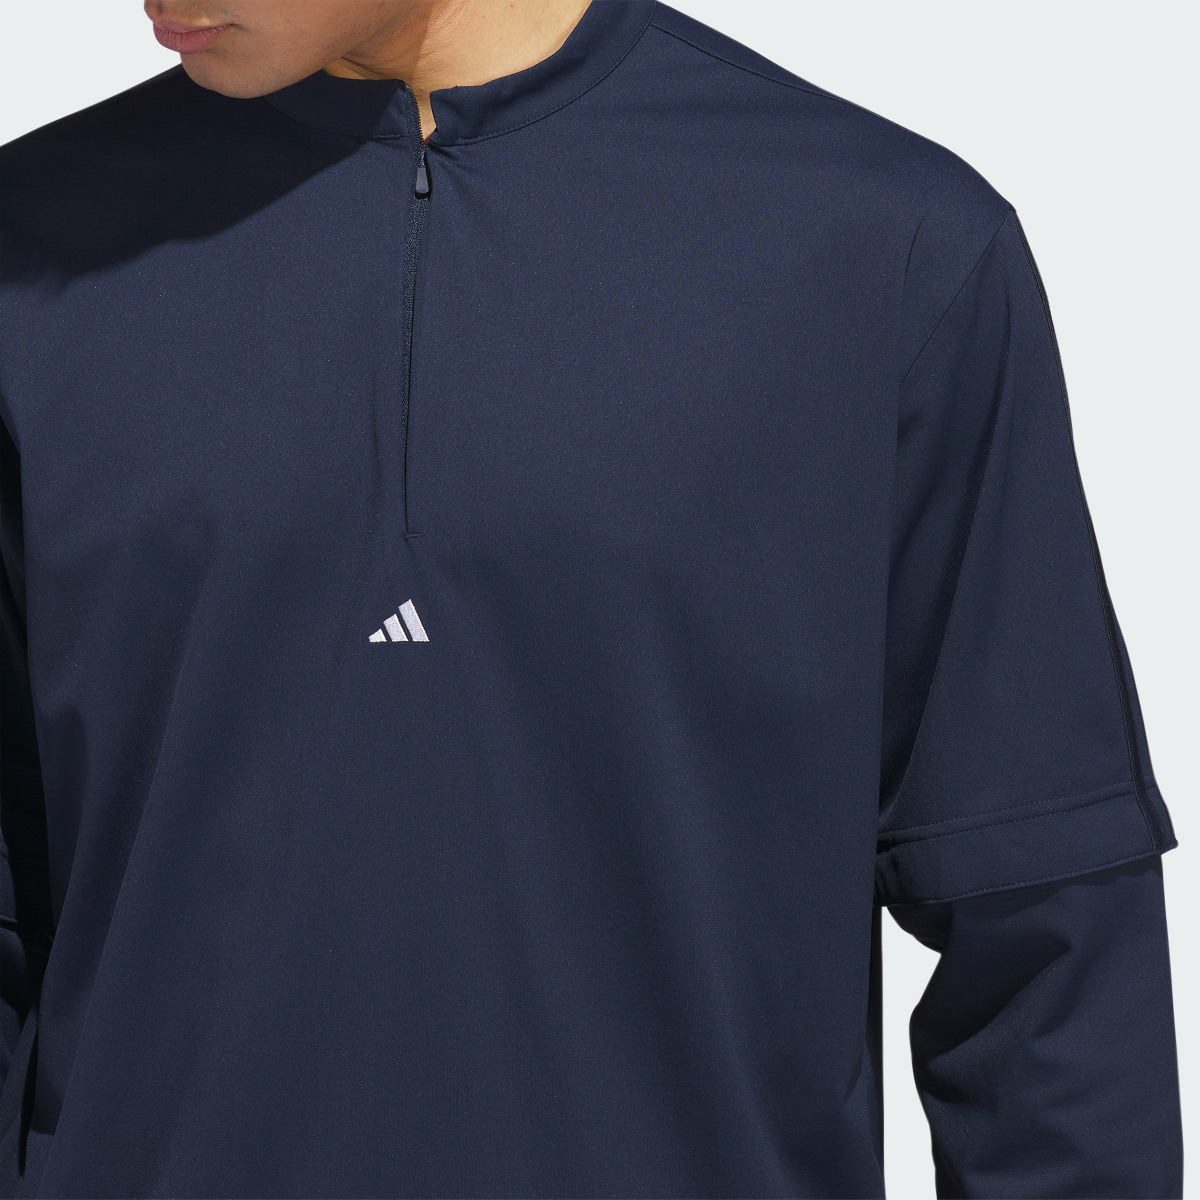 Adidas Ultimate365 Half-Zip Pullover. 6